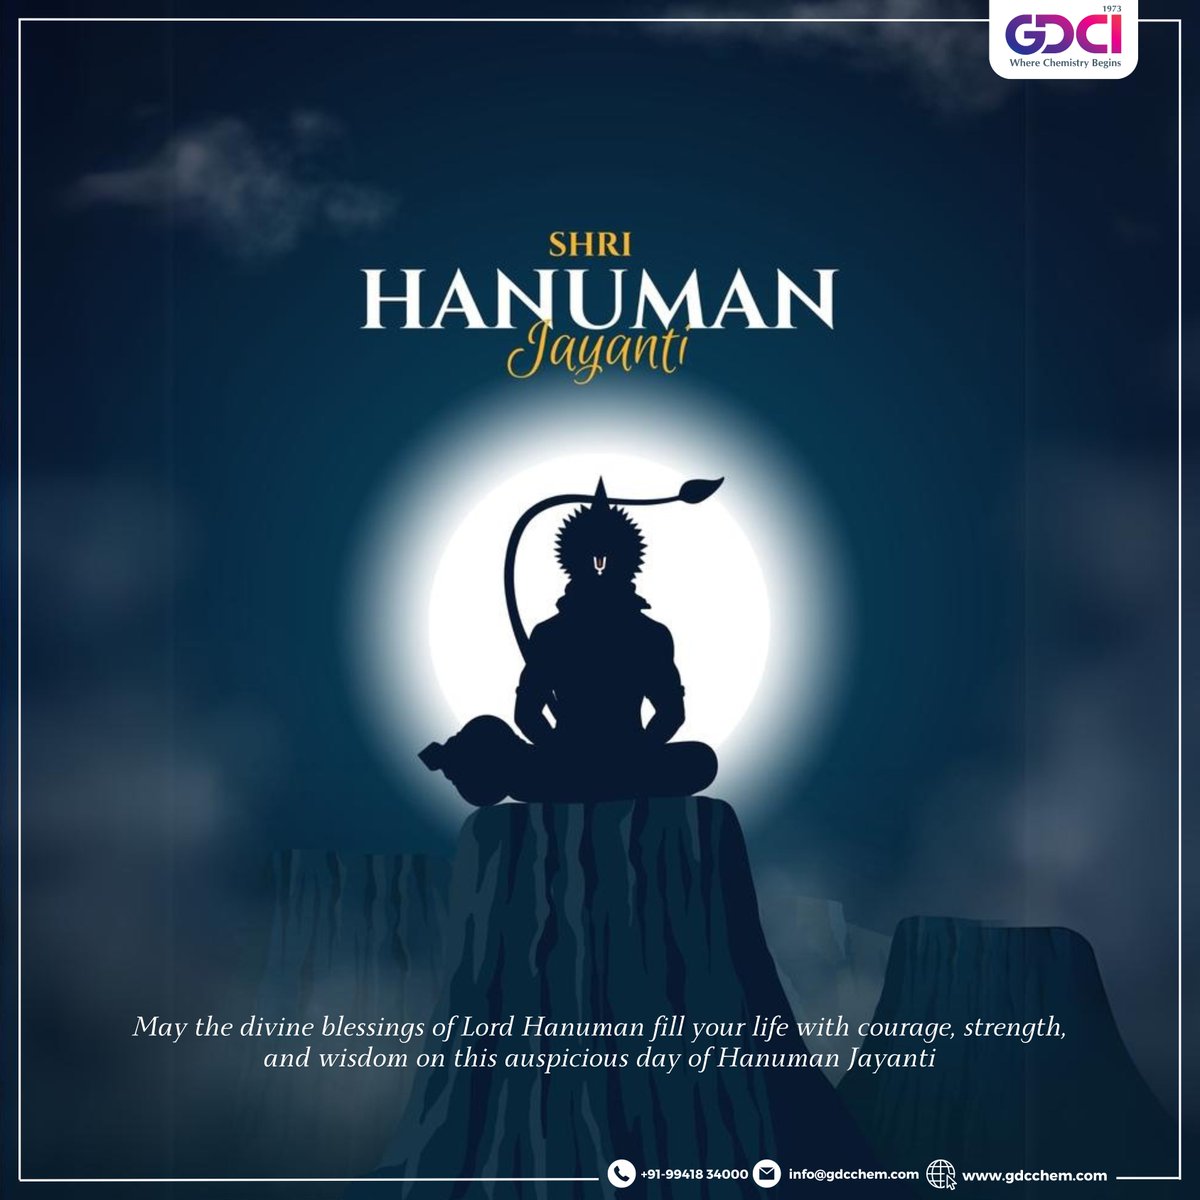 On the wings of Hanuman's devotion, let our spirits soar to greater heights.!

#HanumanJayanthi #HanumanChalisa #LordHanuman #Devotion #Strength #Courage  #Festival #Celebration #Mythology #IndianCulture #SpiritualJourney #DivineEnergy #Hanuman #HanumanJayanthi2024 #GDCIIndia